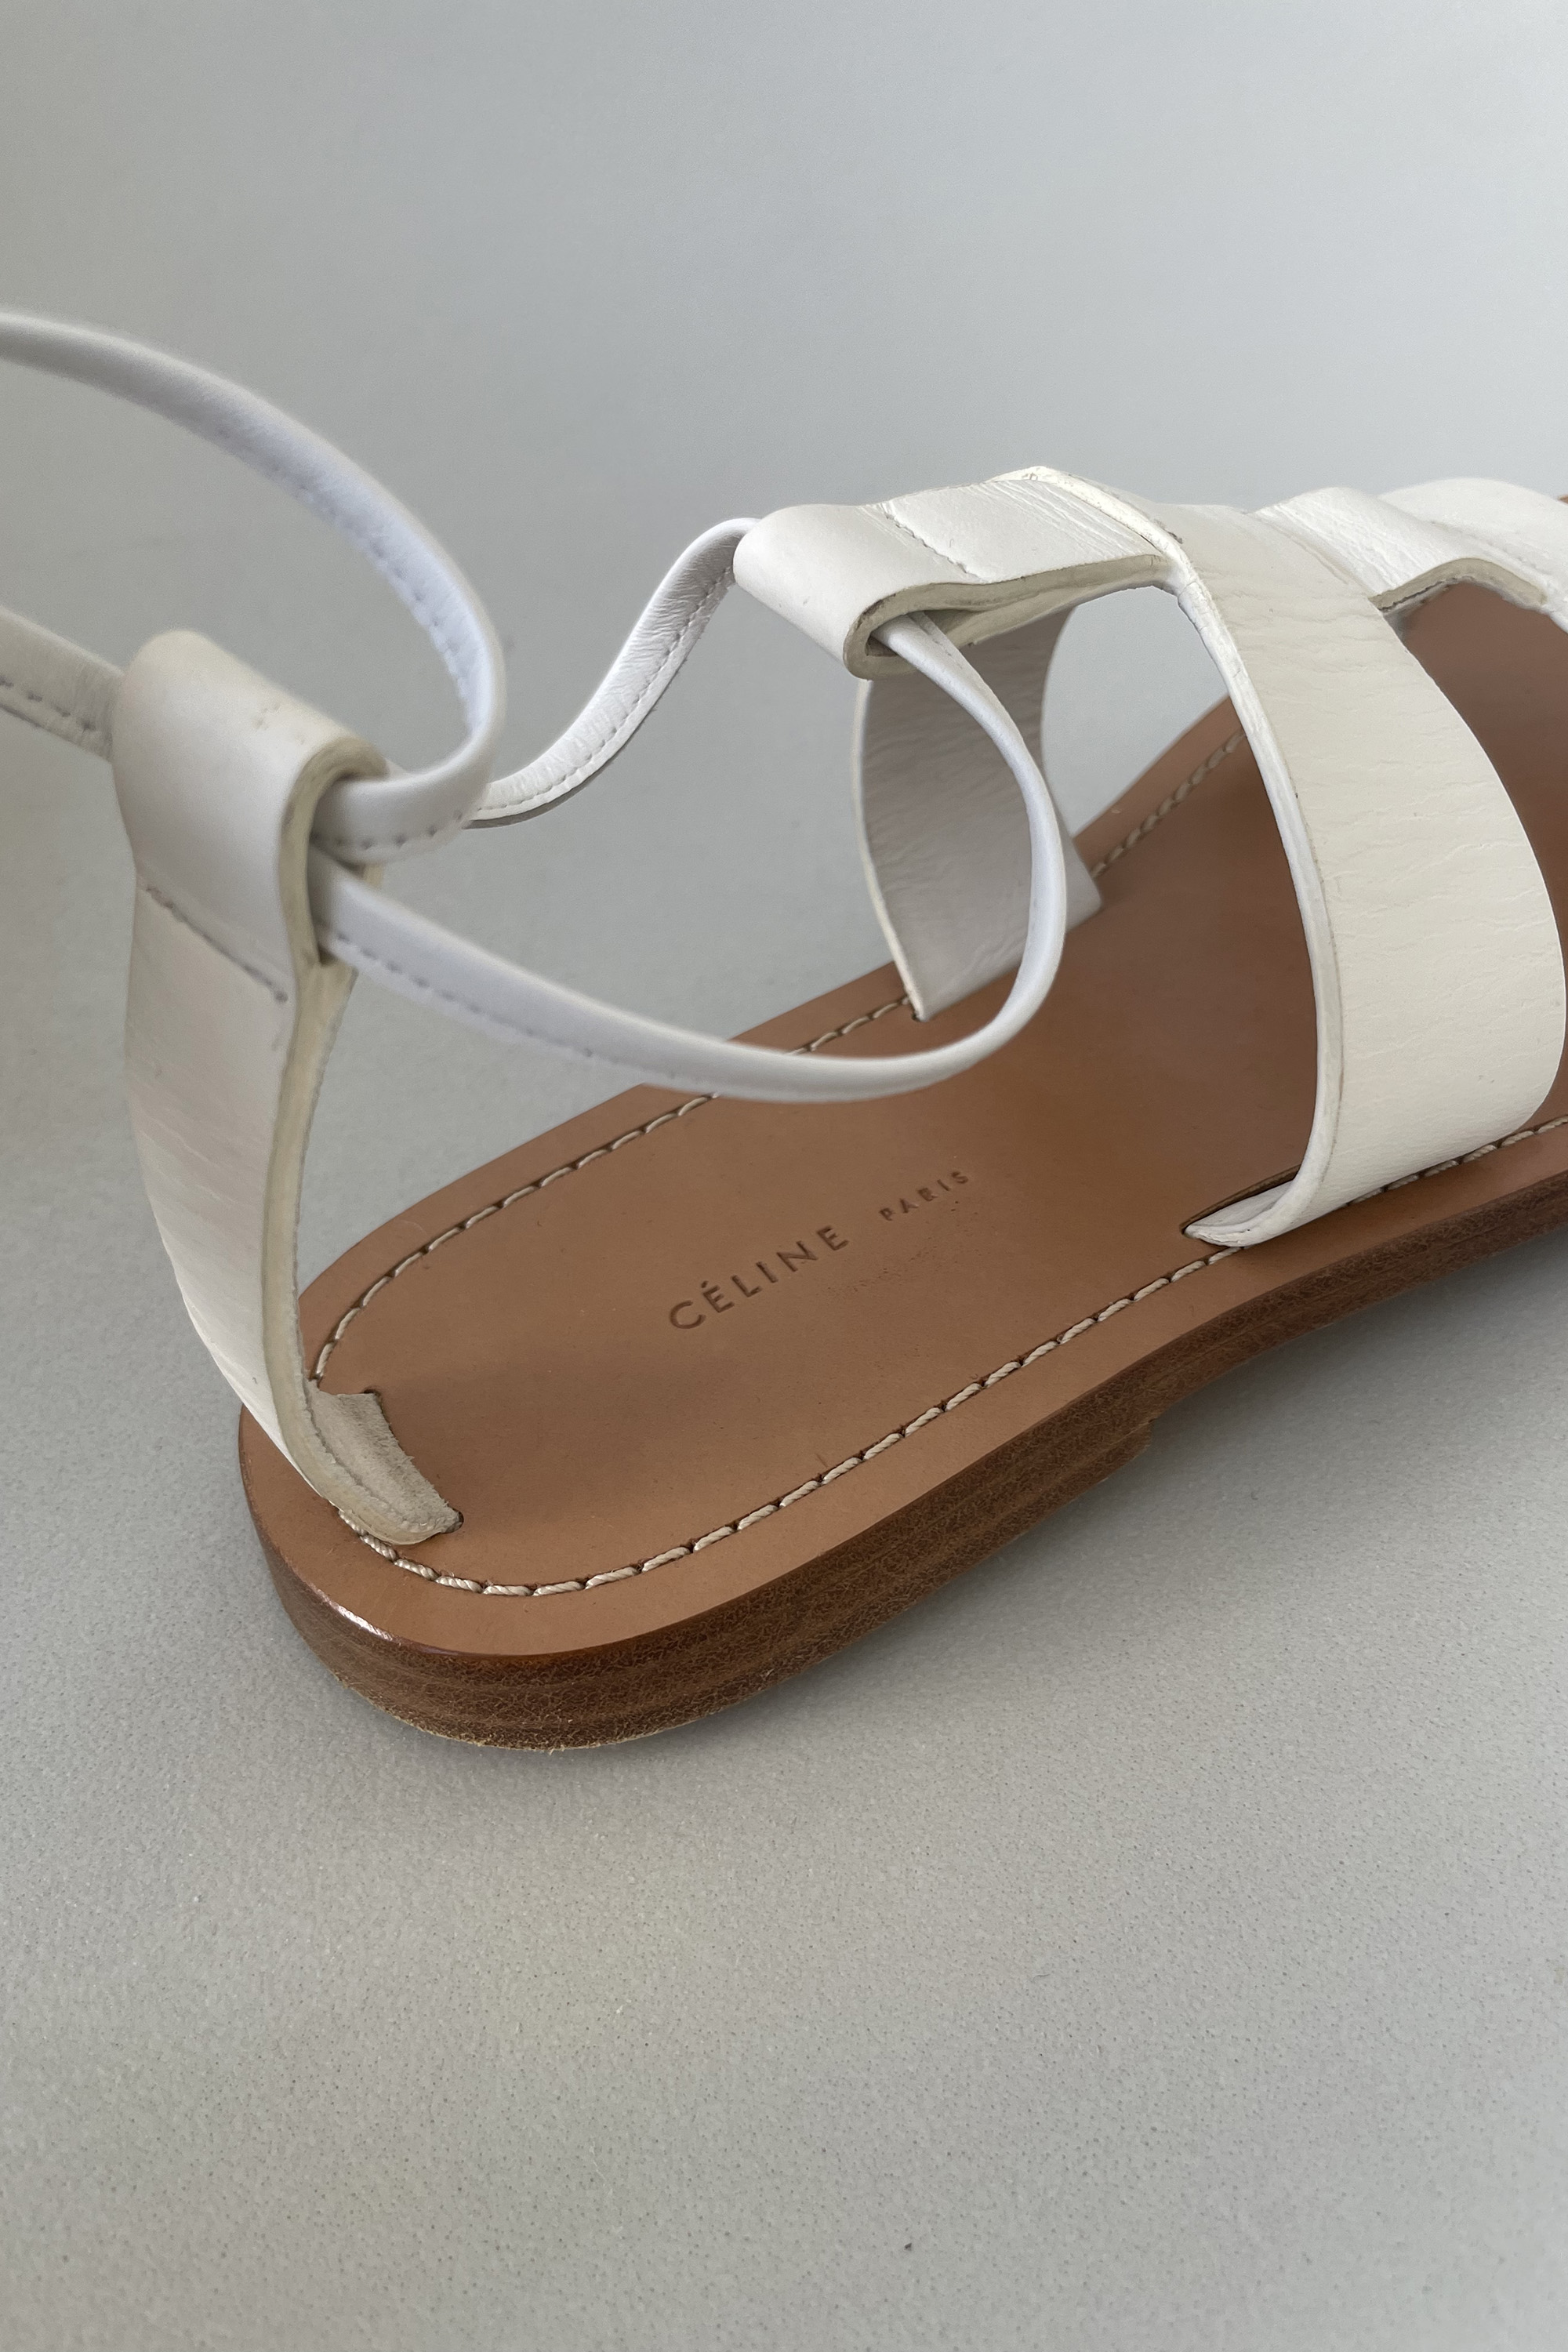 CELINE strap sandal